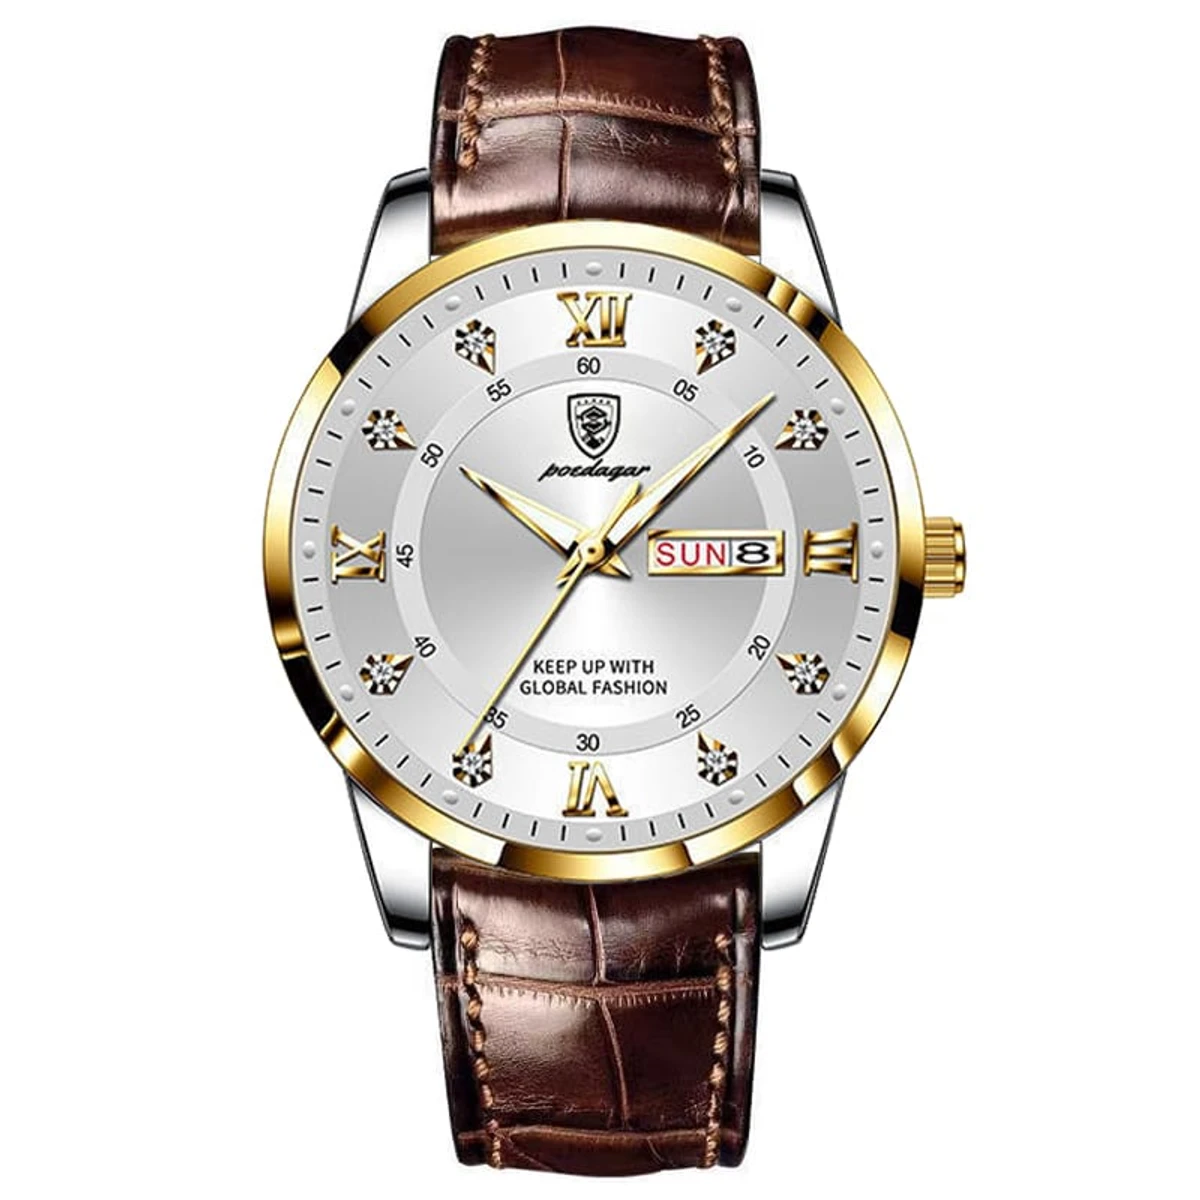 POEDAGAR Luxury Men’s Luminous Clasp Date Week Sport Stainless Steel Wristwatch - belt